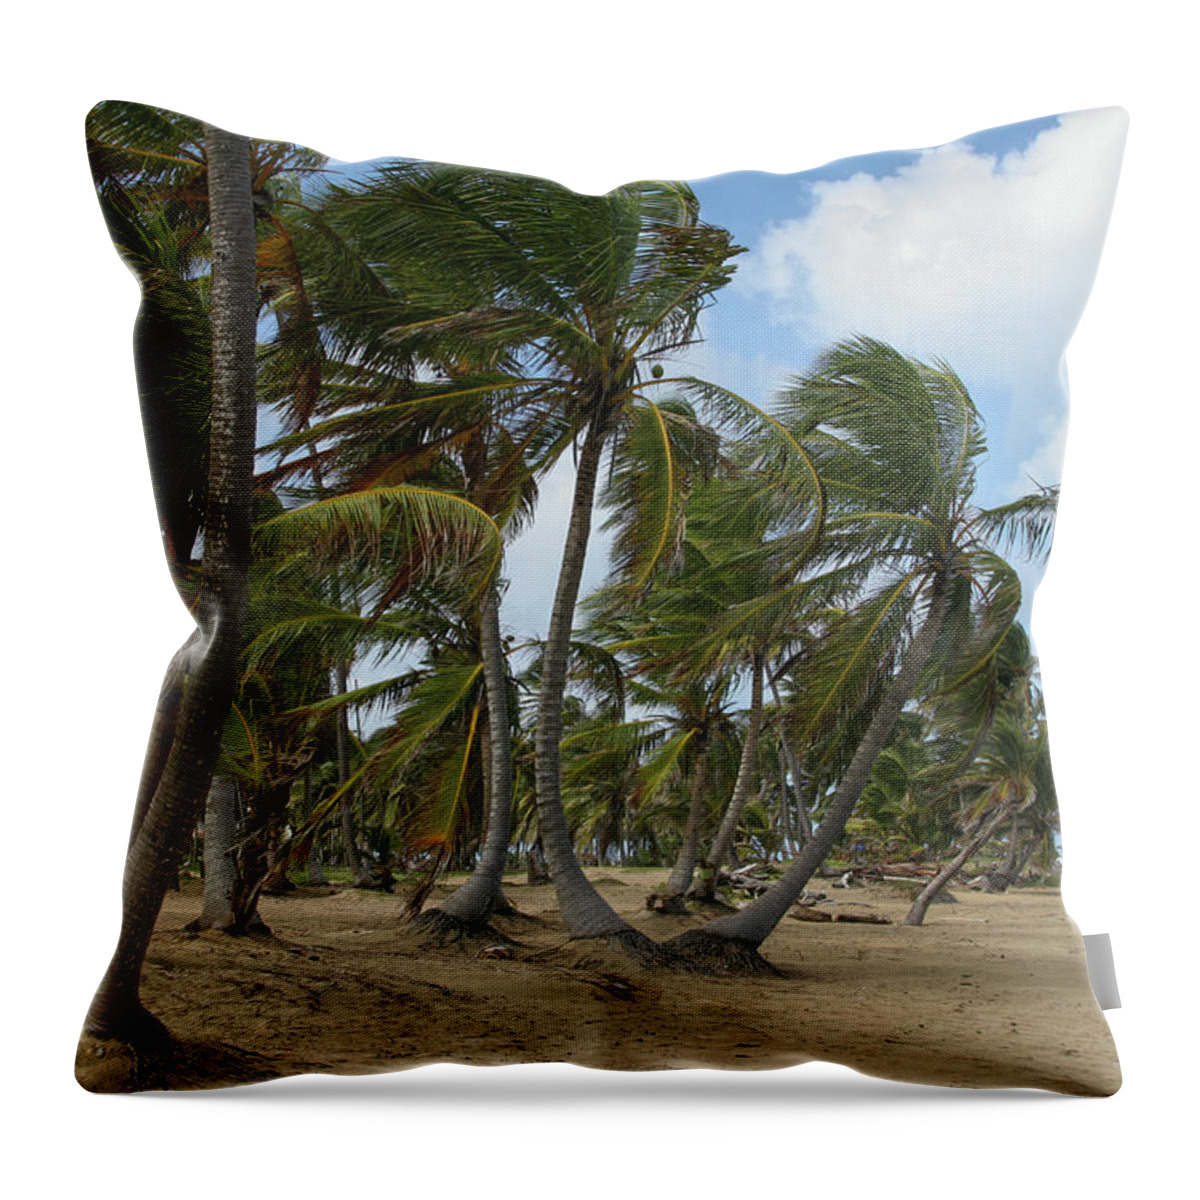 Island Throw Pillow featuring the photograph Sway by Robert Och